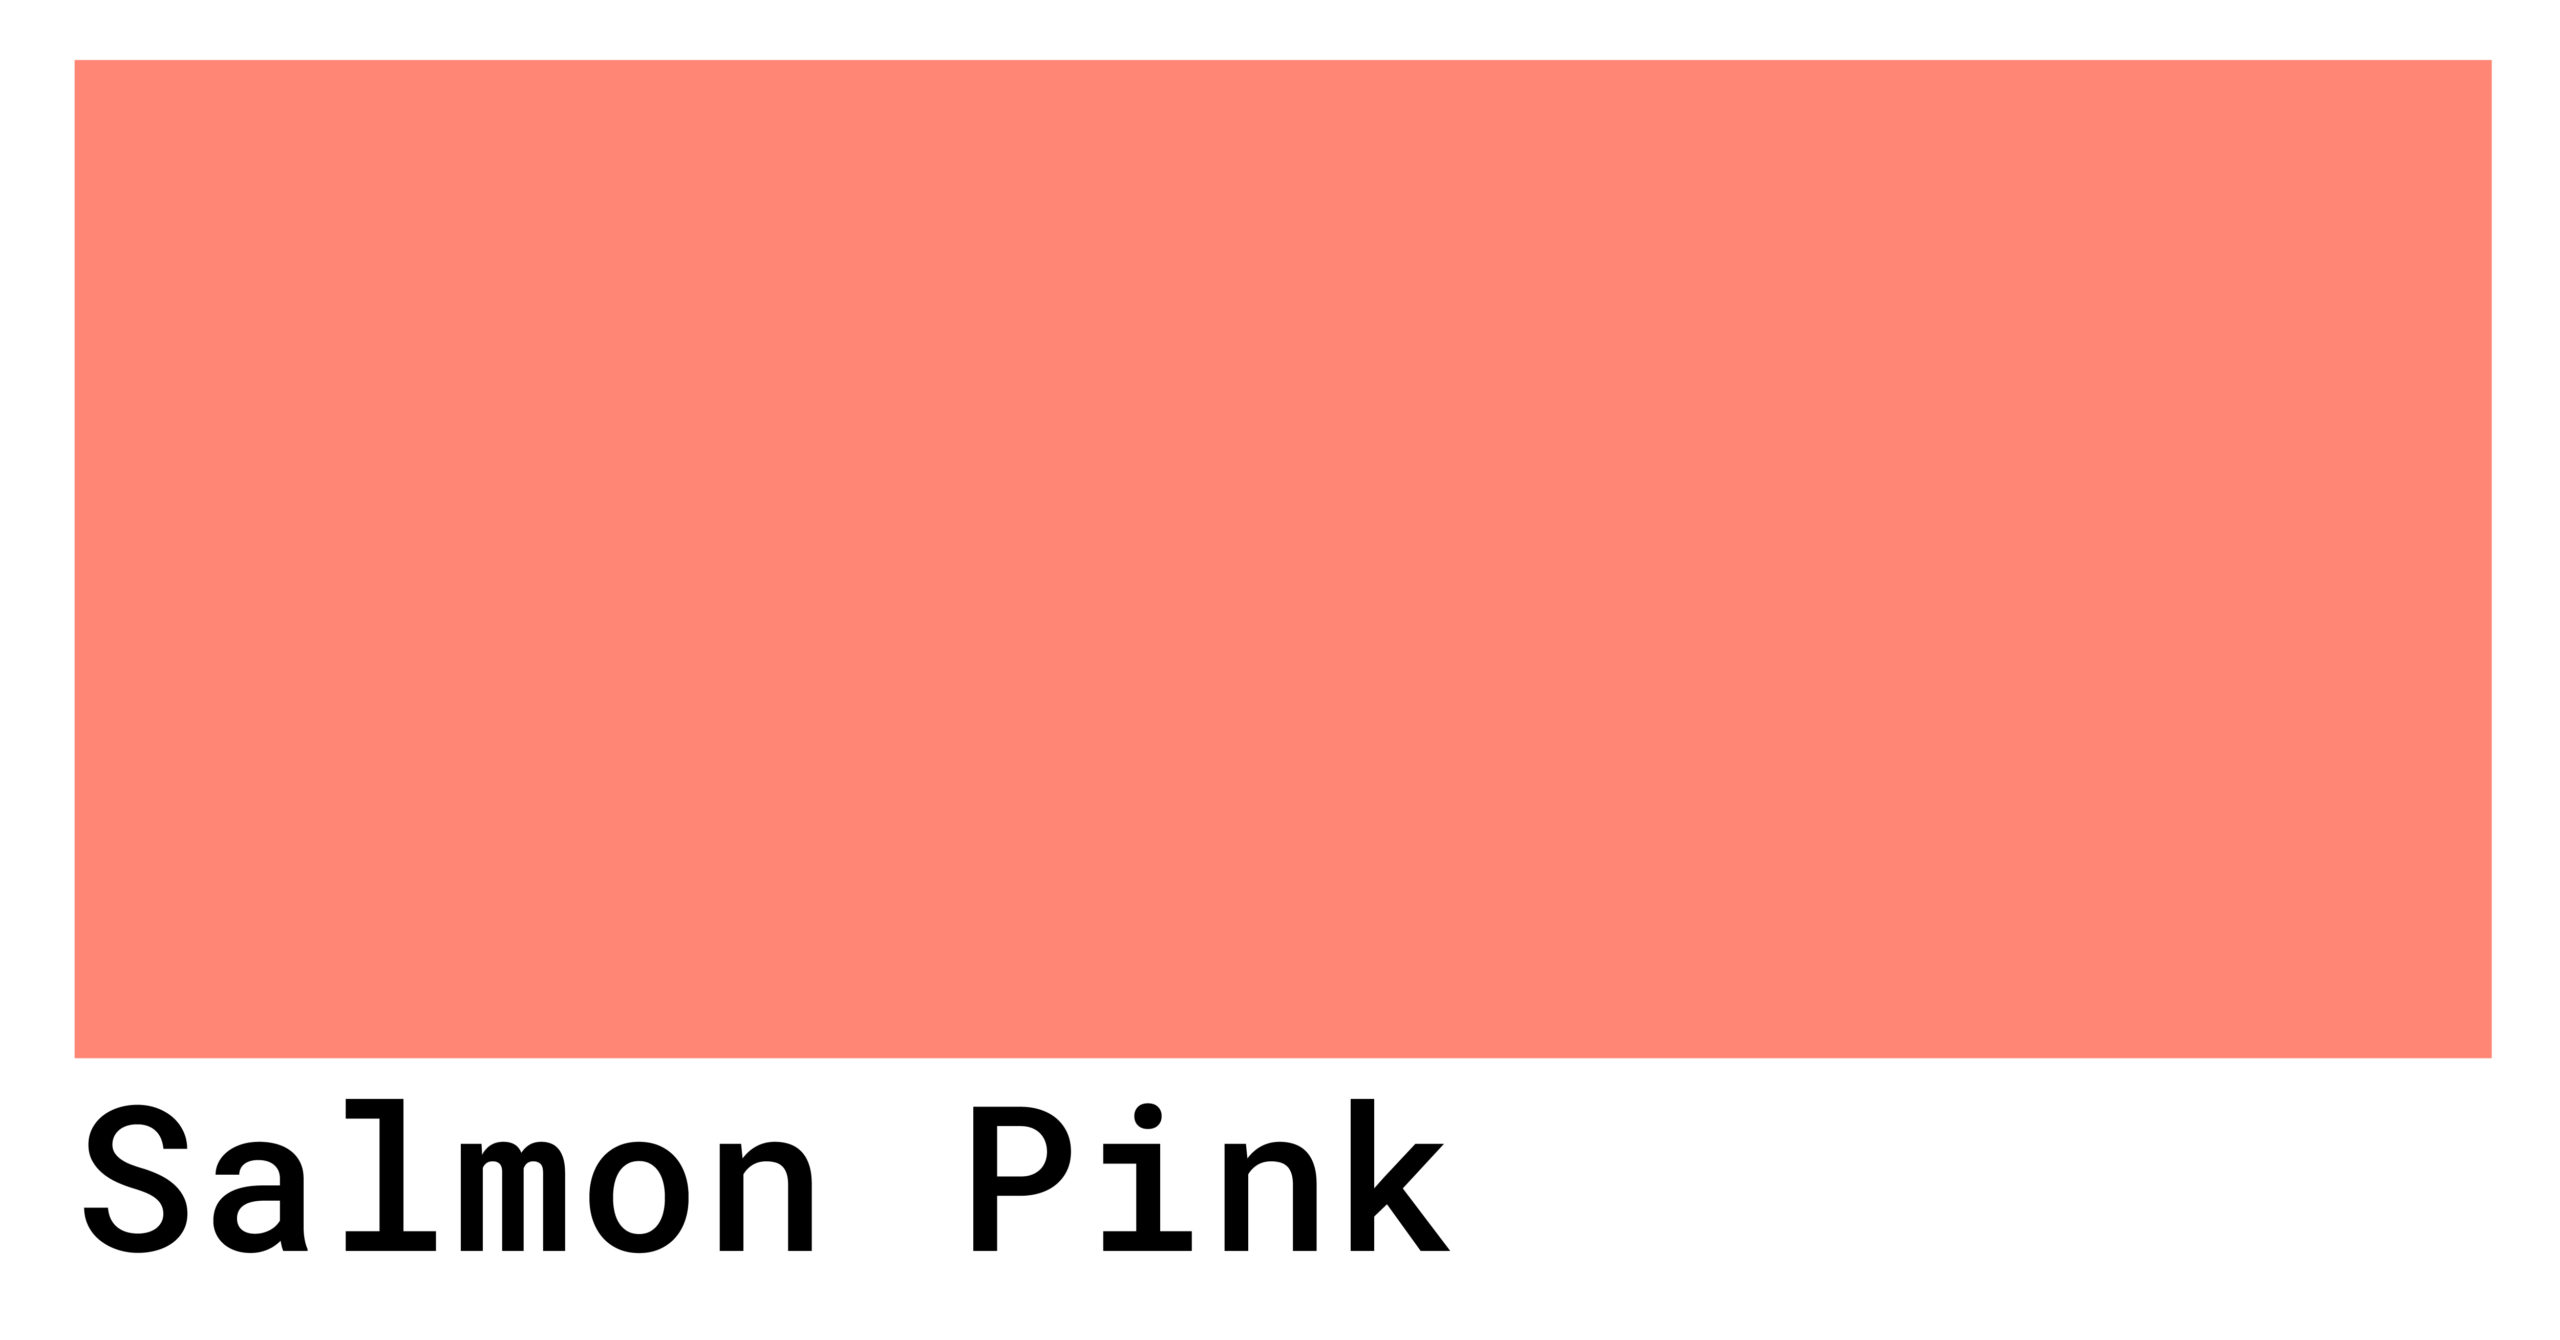 Salmon Pink information, Hsl, Rgb